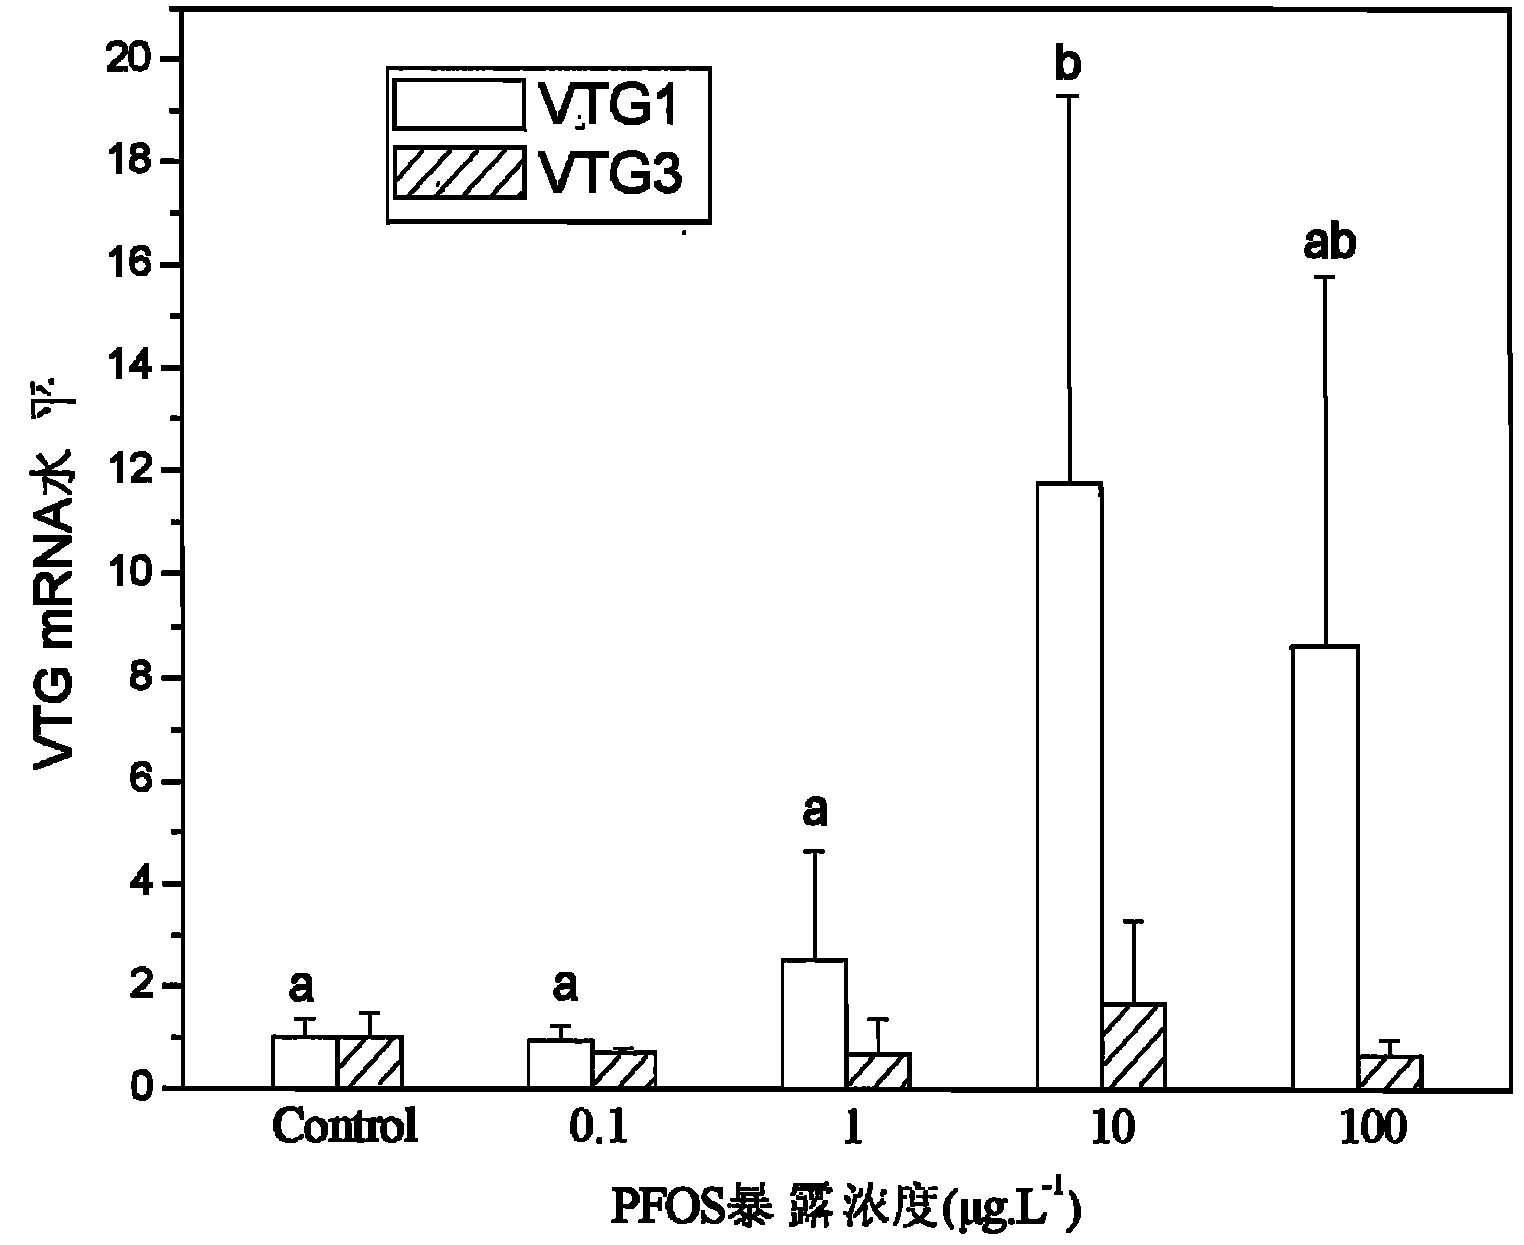 Method for regulating and controlling mRNA (messenger Ribonucleic Acid) level of zebra fish vitellogenin